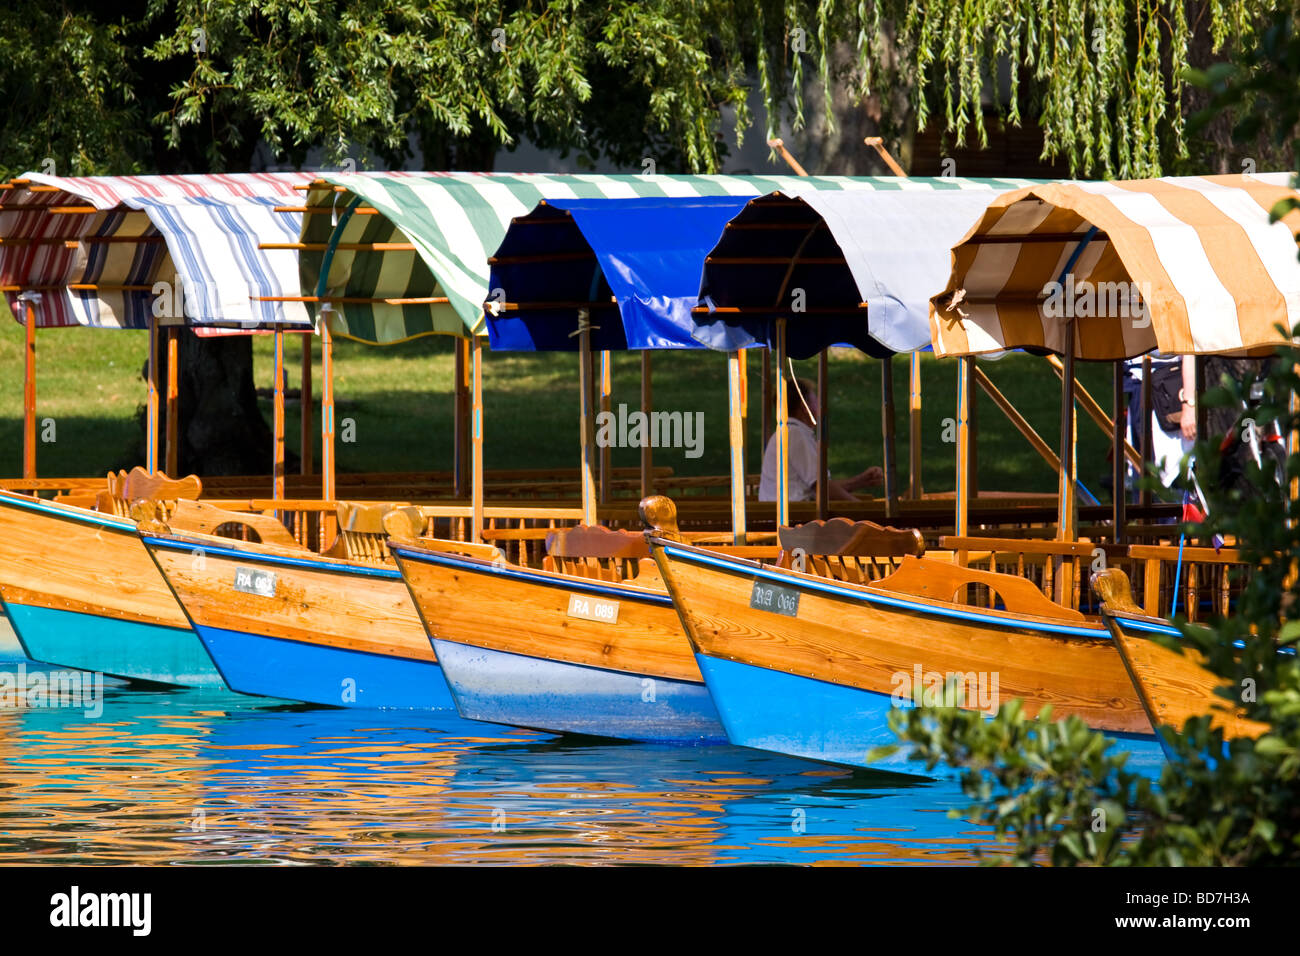 Pletna Boats at Lake Bled Gorenjska Slovenia Stock Photo